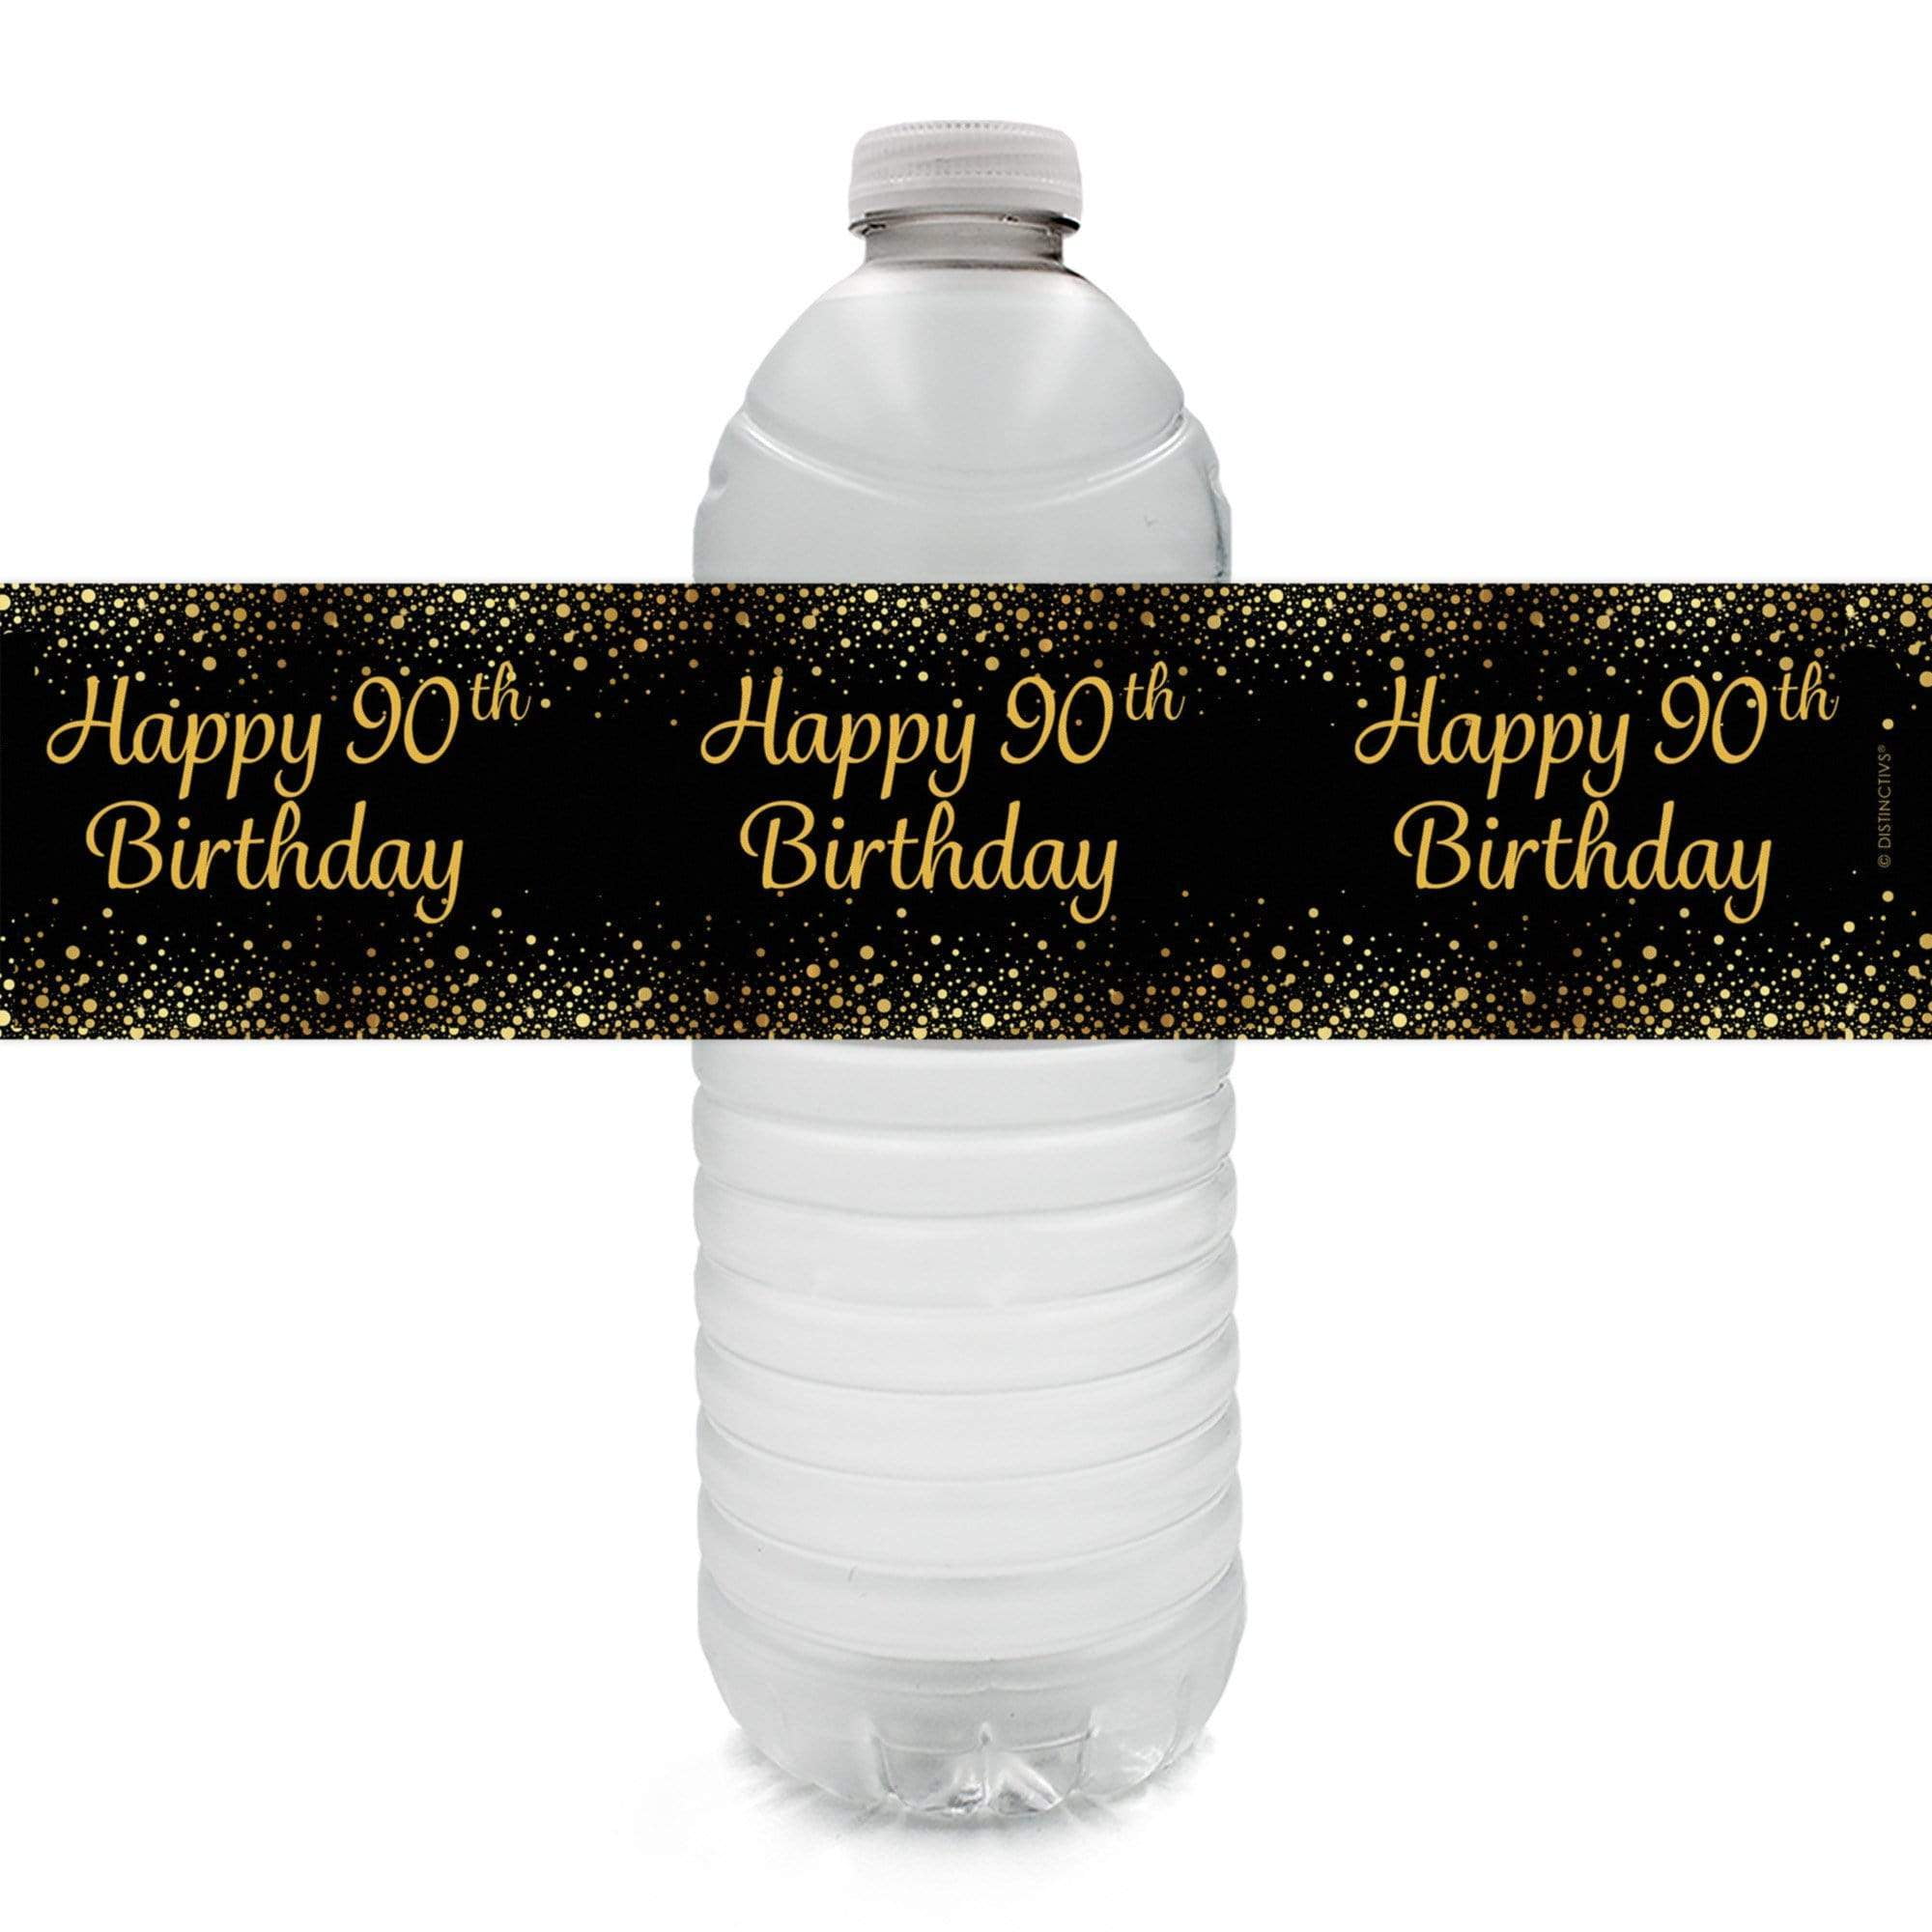 100 Silver Confetti Falling Wedding Anniversay Birthday Water Bottle Labels 